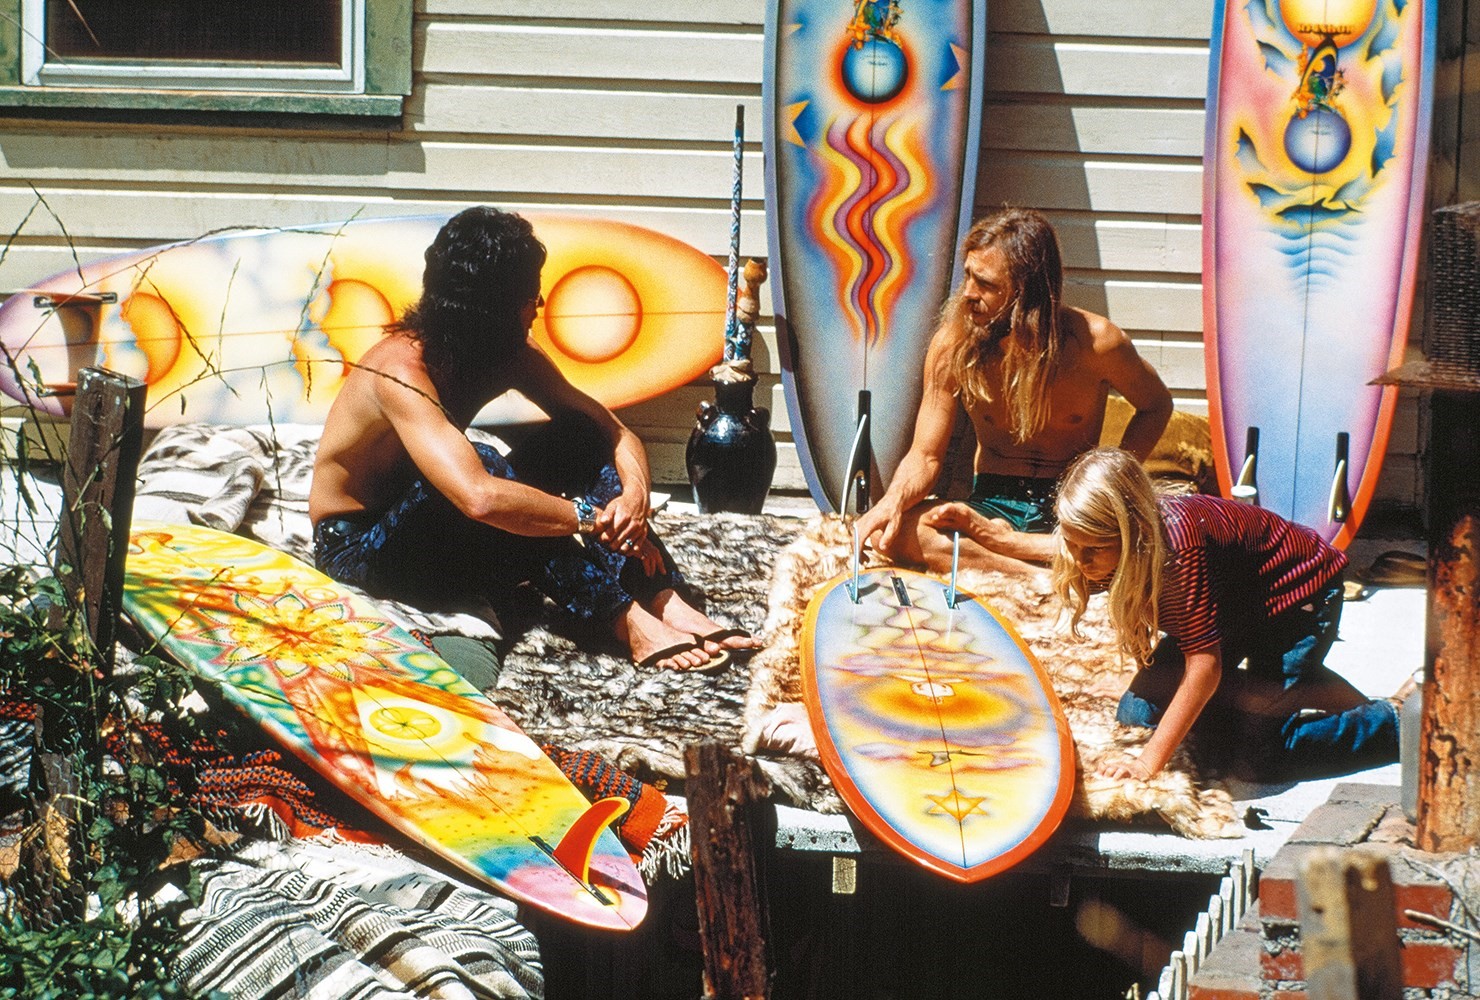 Exemplo da contracultura dos surfista dos anos 70s.